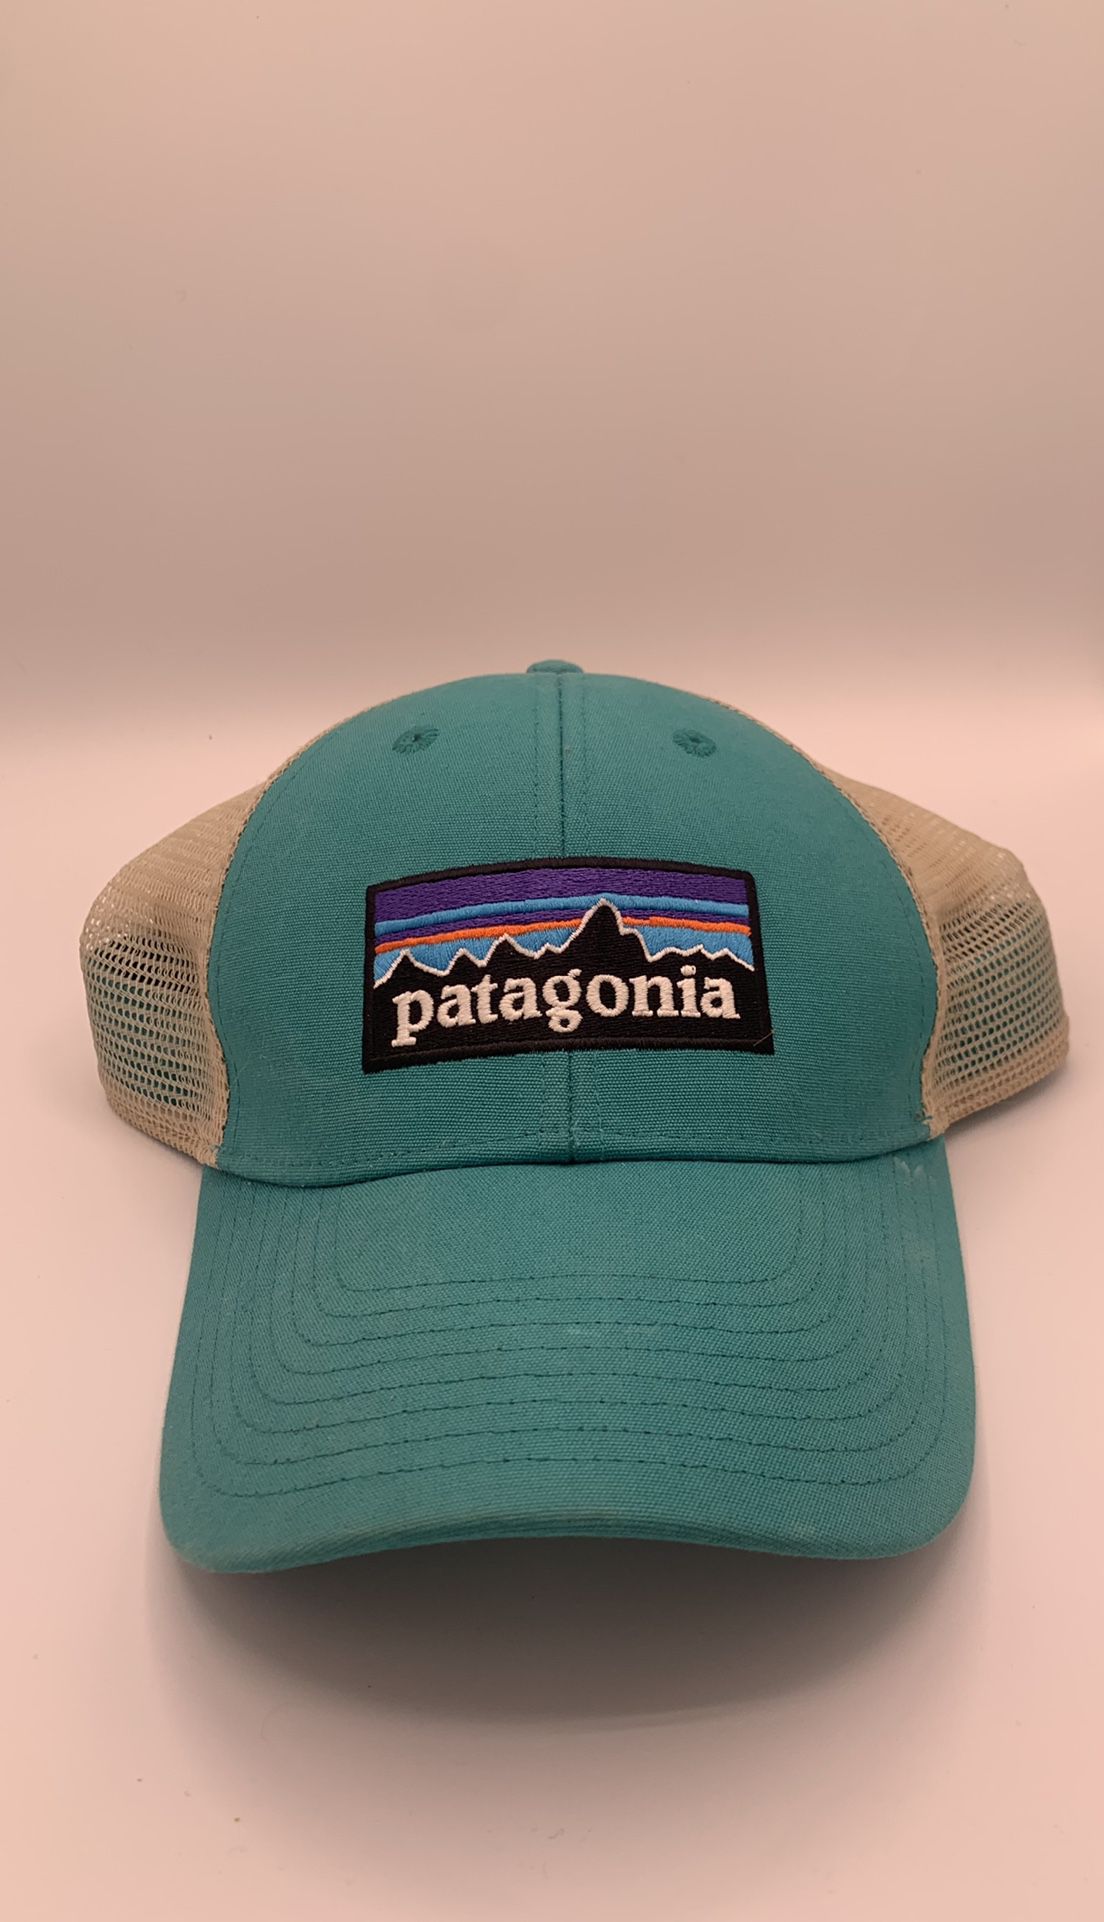 Patagonia Trucker Hats 